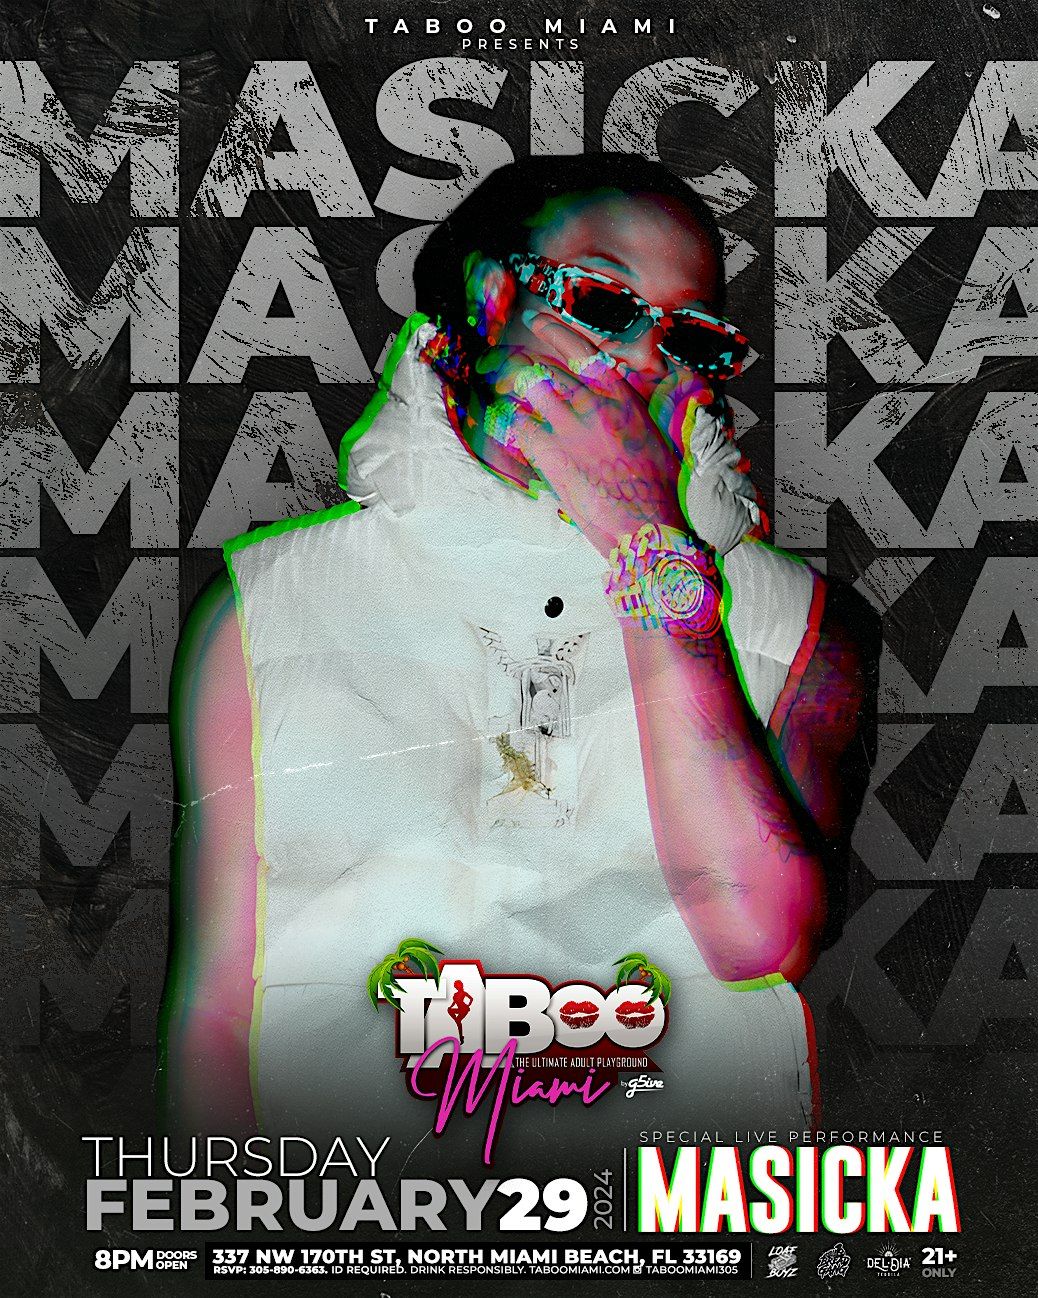 Masicka Thursday February 29th